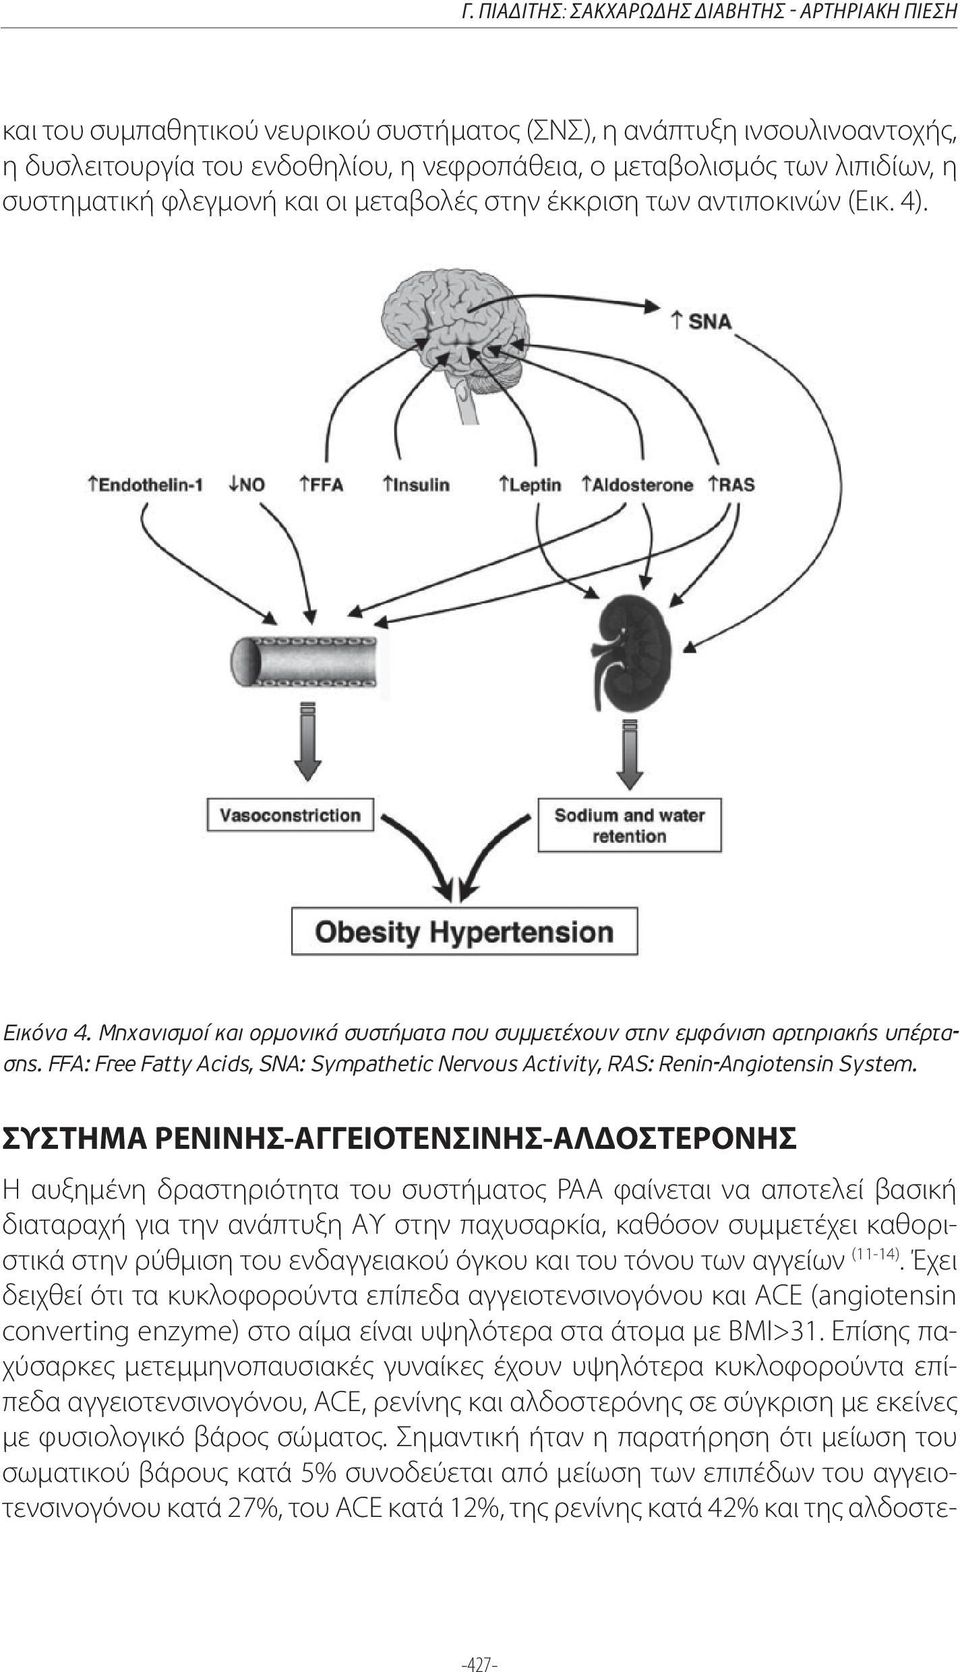 FFA: Free Fatty Acids, SNA: Sympathetic Nervous Activity, RAS: Renin-Angiotensin System.